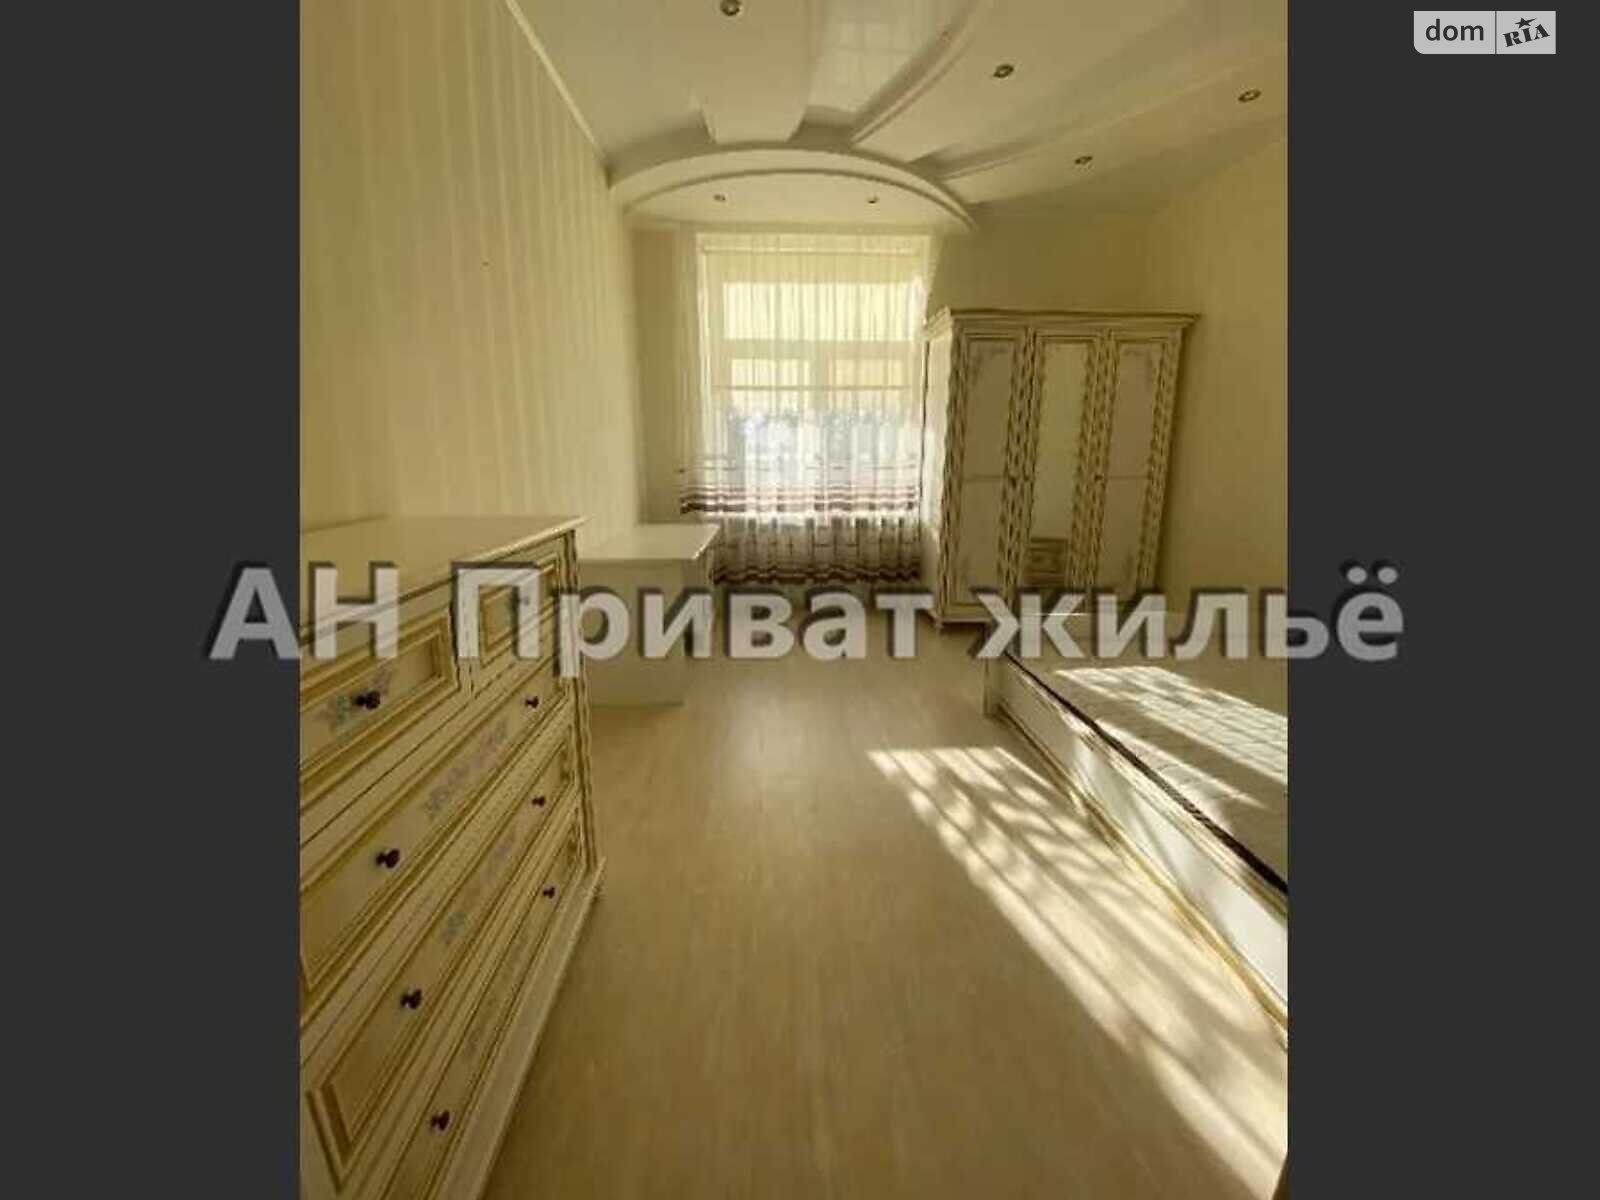 Продажа четырехкомнатной квартиры в Полтаве, на ул. Петра Юрченко, район Браилки фото 1